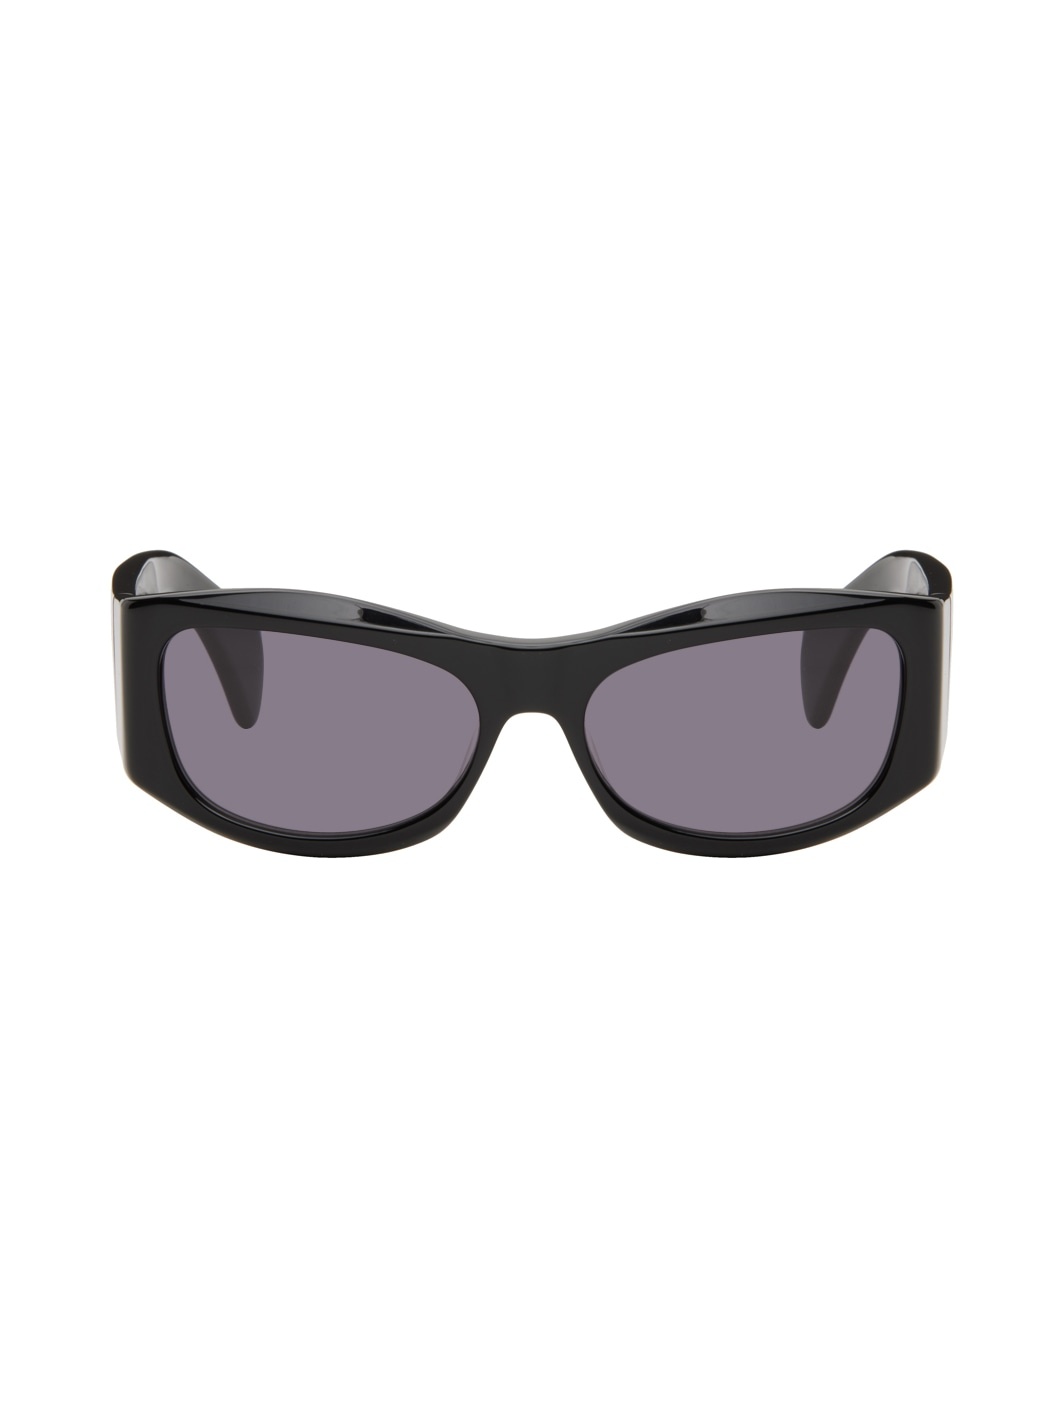 Black Aether Sunglasses - 1